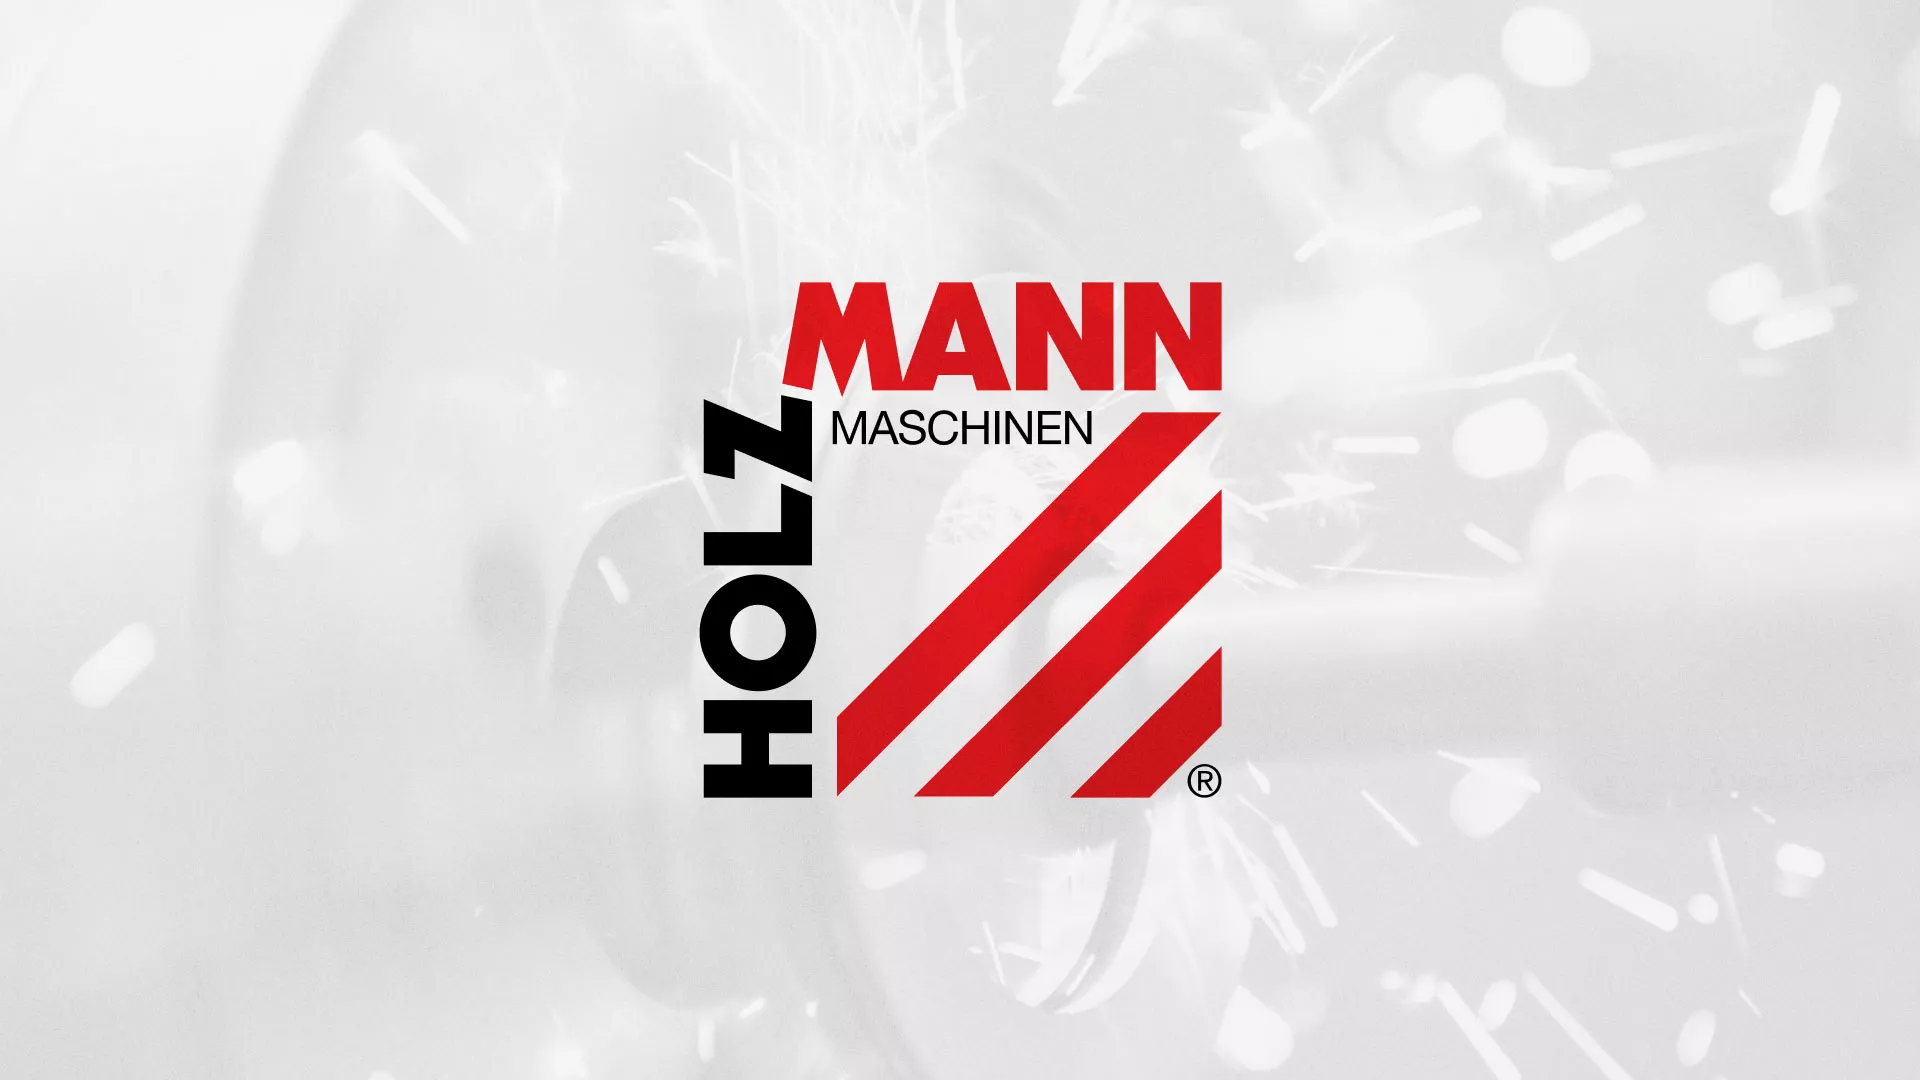 Создание сайта компании «HOLZMANN Maschinen GmbH» в Судже